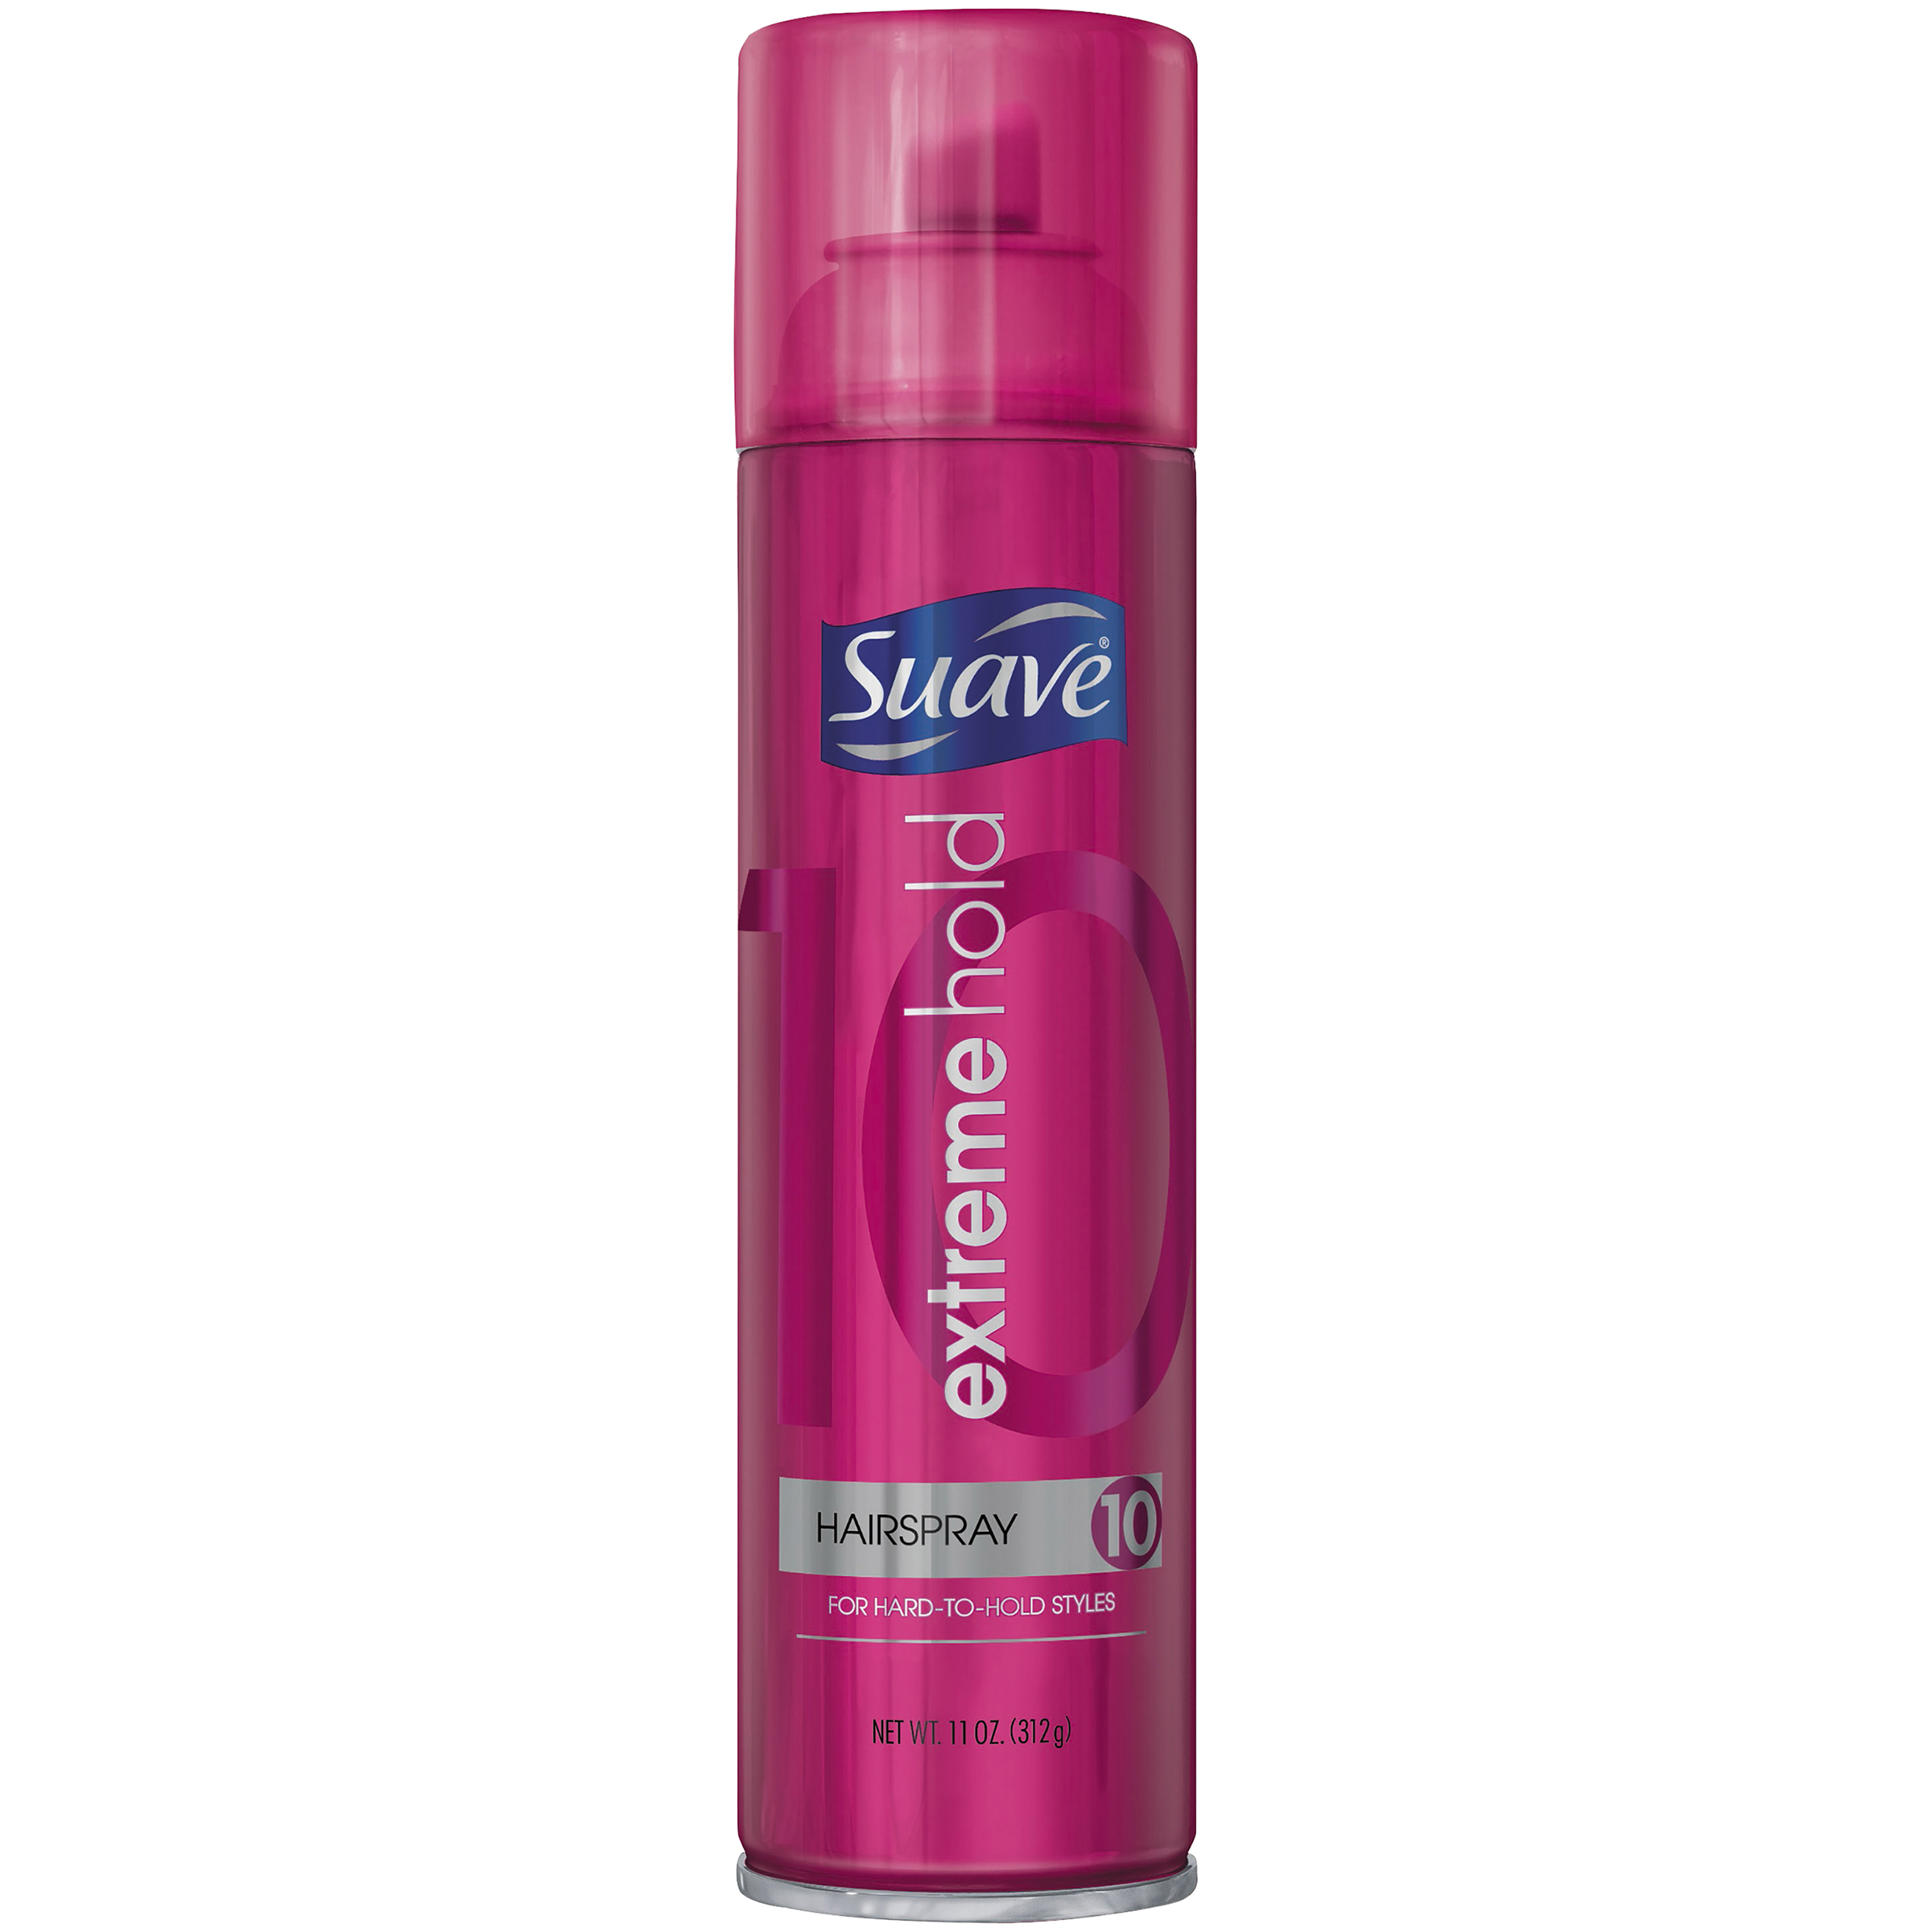 Suave Hairspray, Extreme Hold 10, 11 oz (312 g)